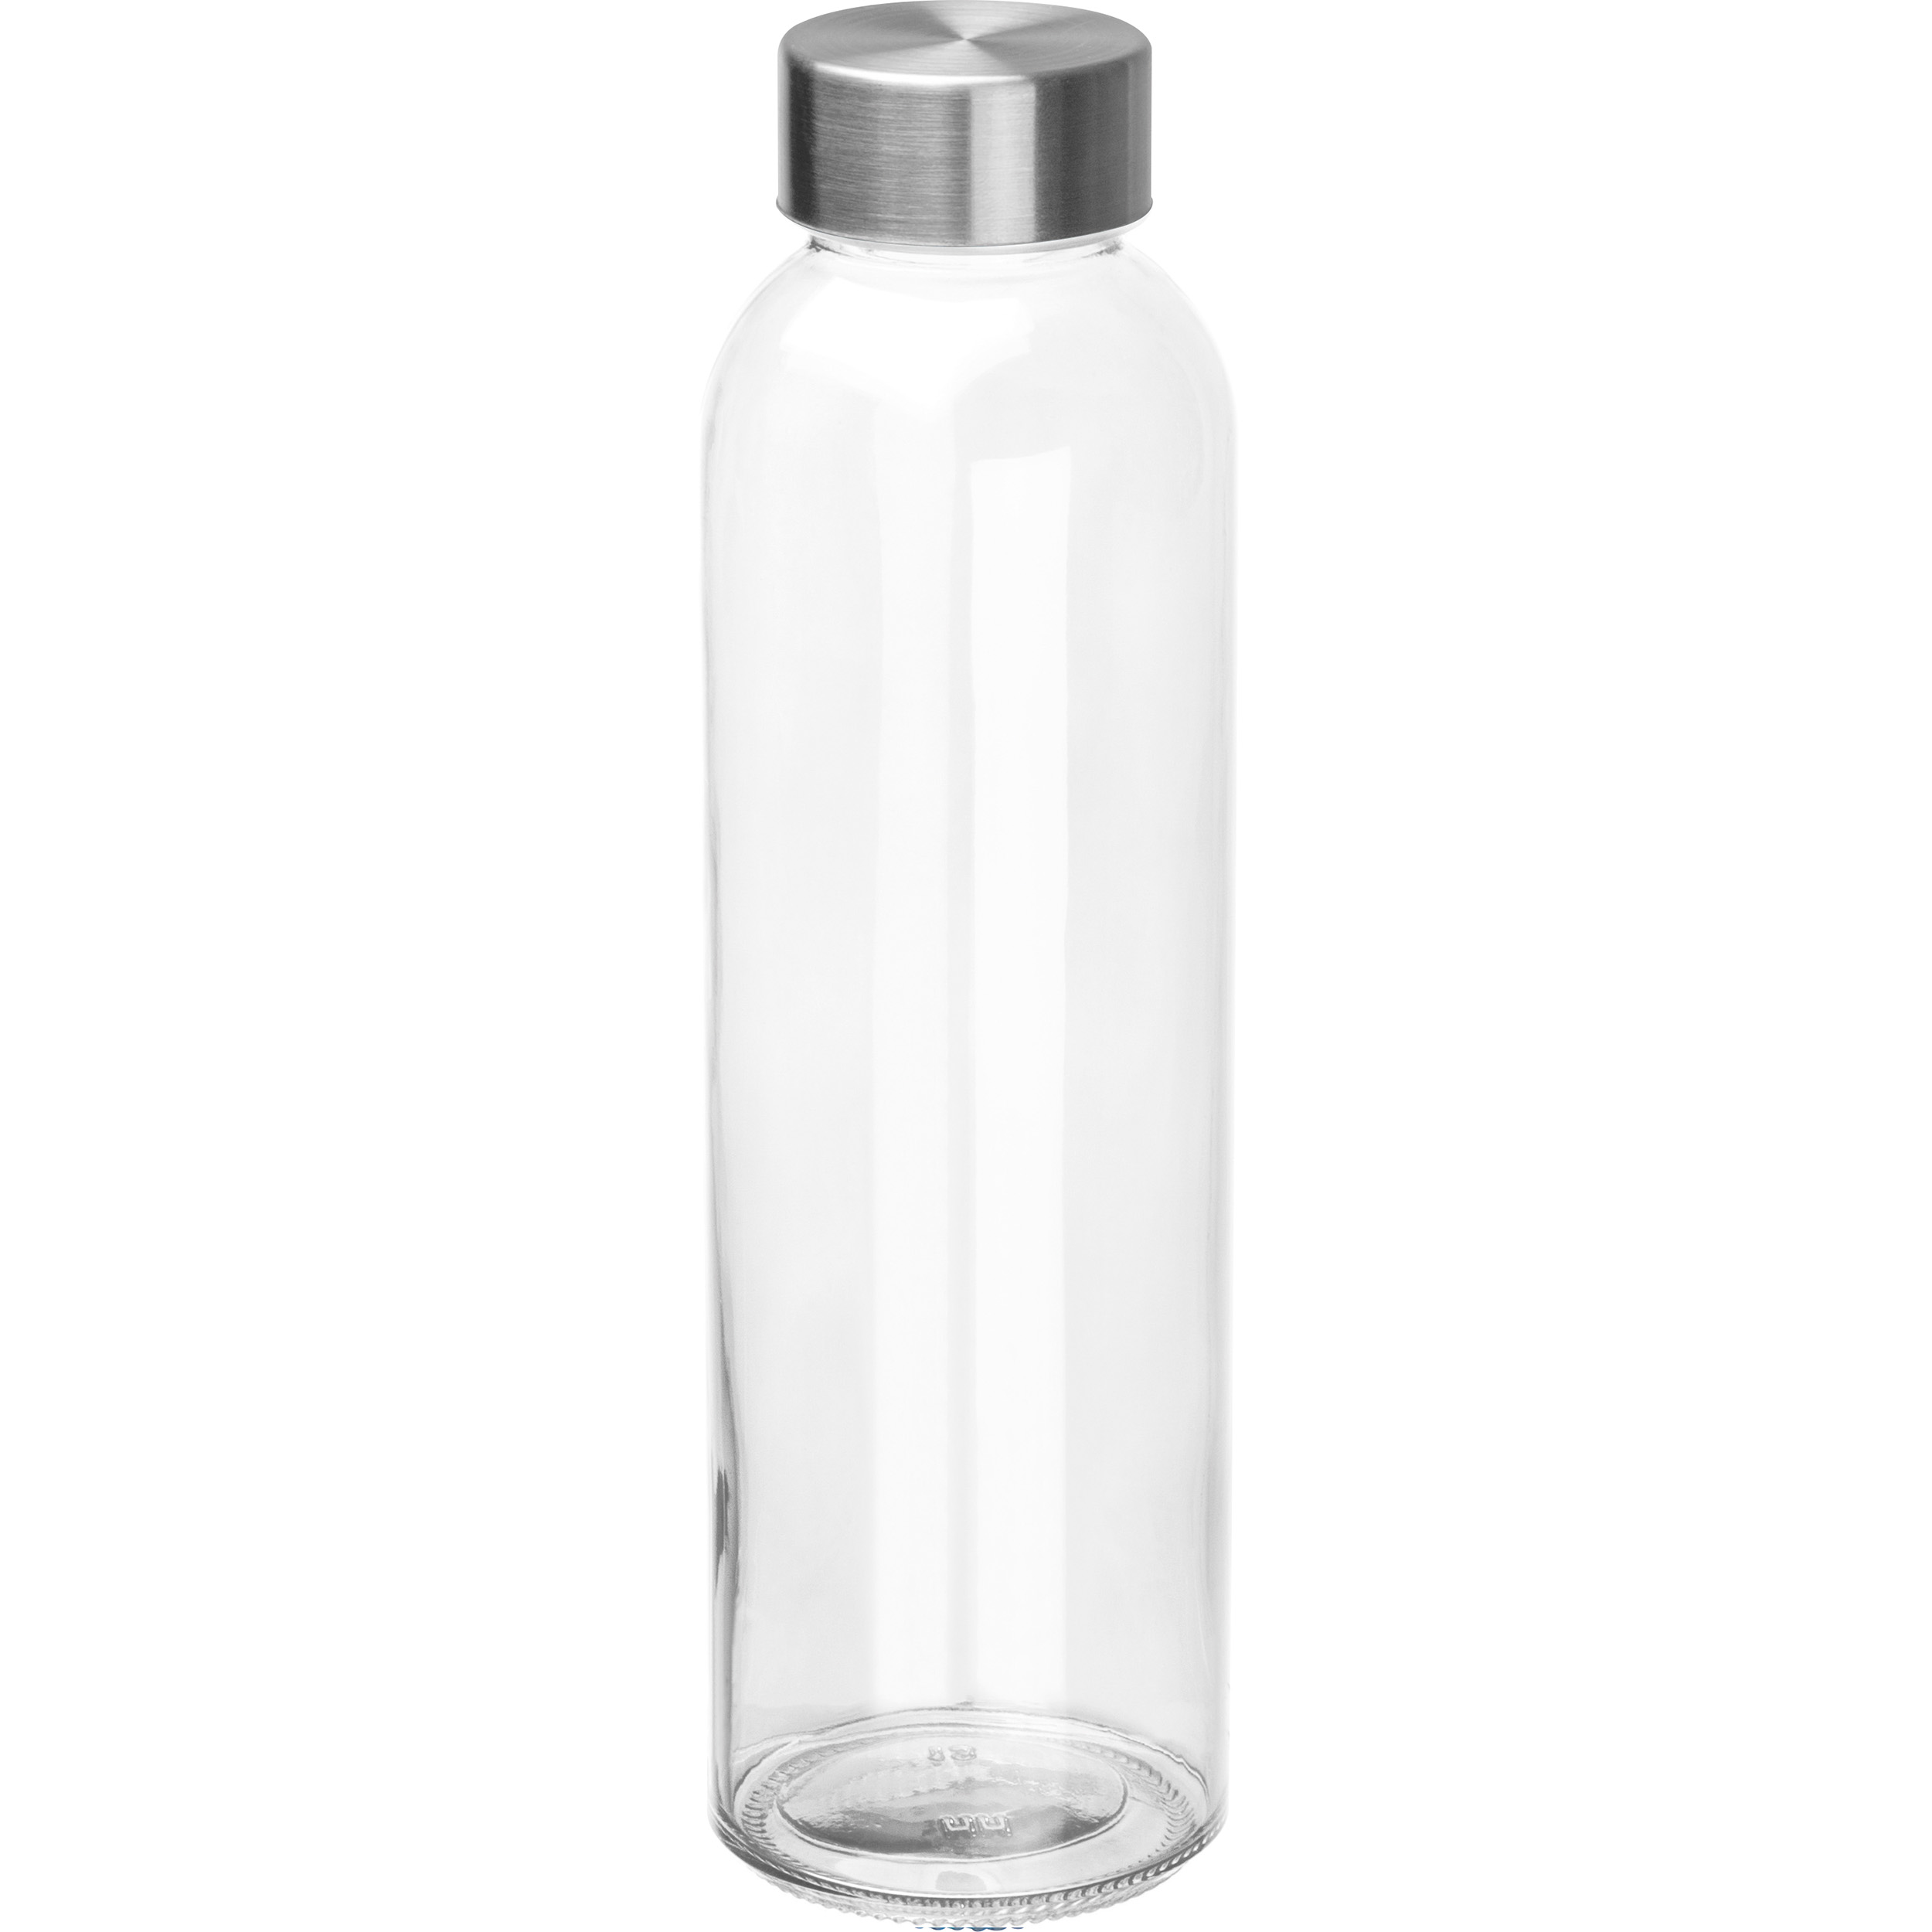 Botella de vidrio Indianápolis